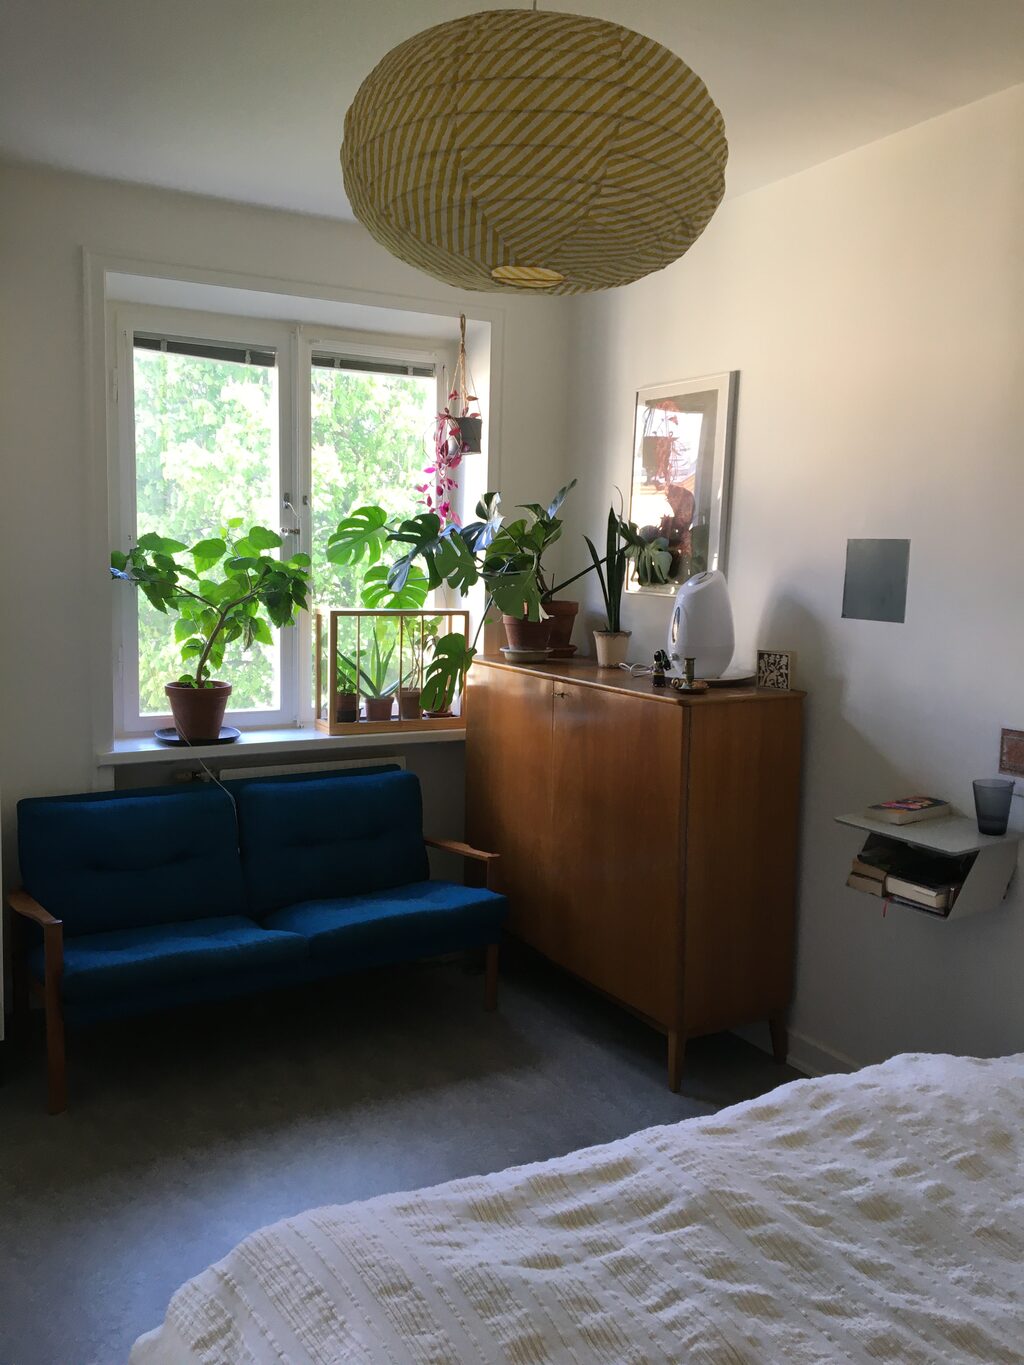 Lägenhetsbyte - Katarina Bangata 29, 116 39 Stockholm